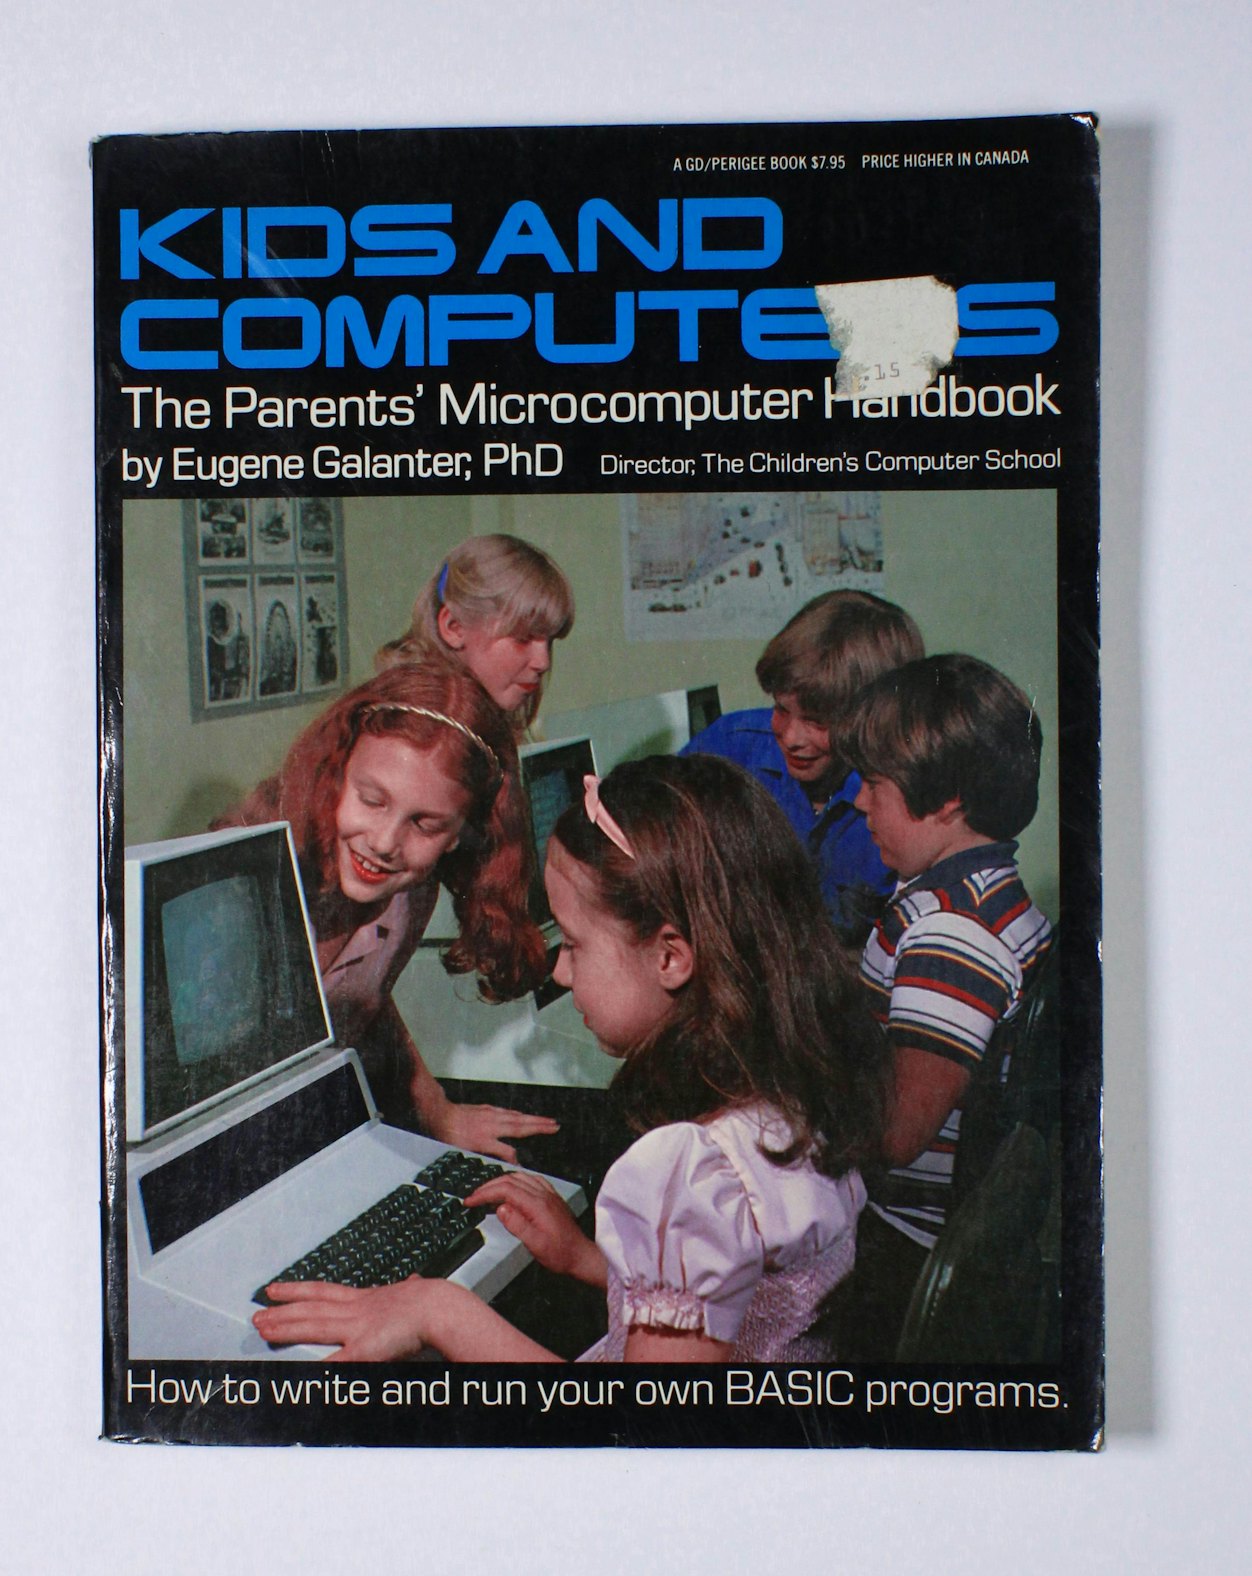 The Parent’s Microcomputer Handbook